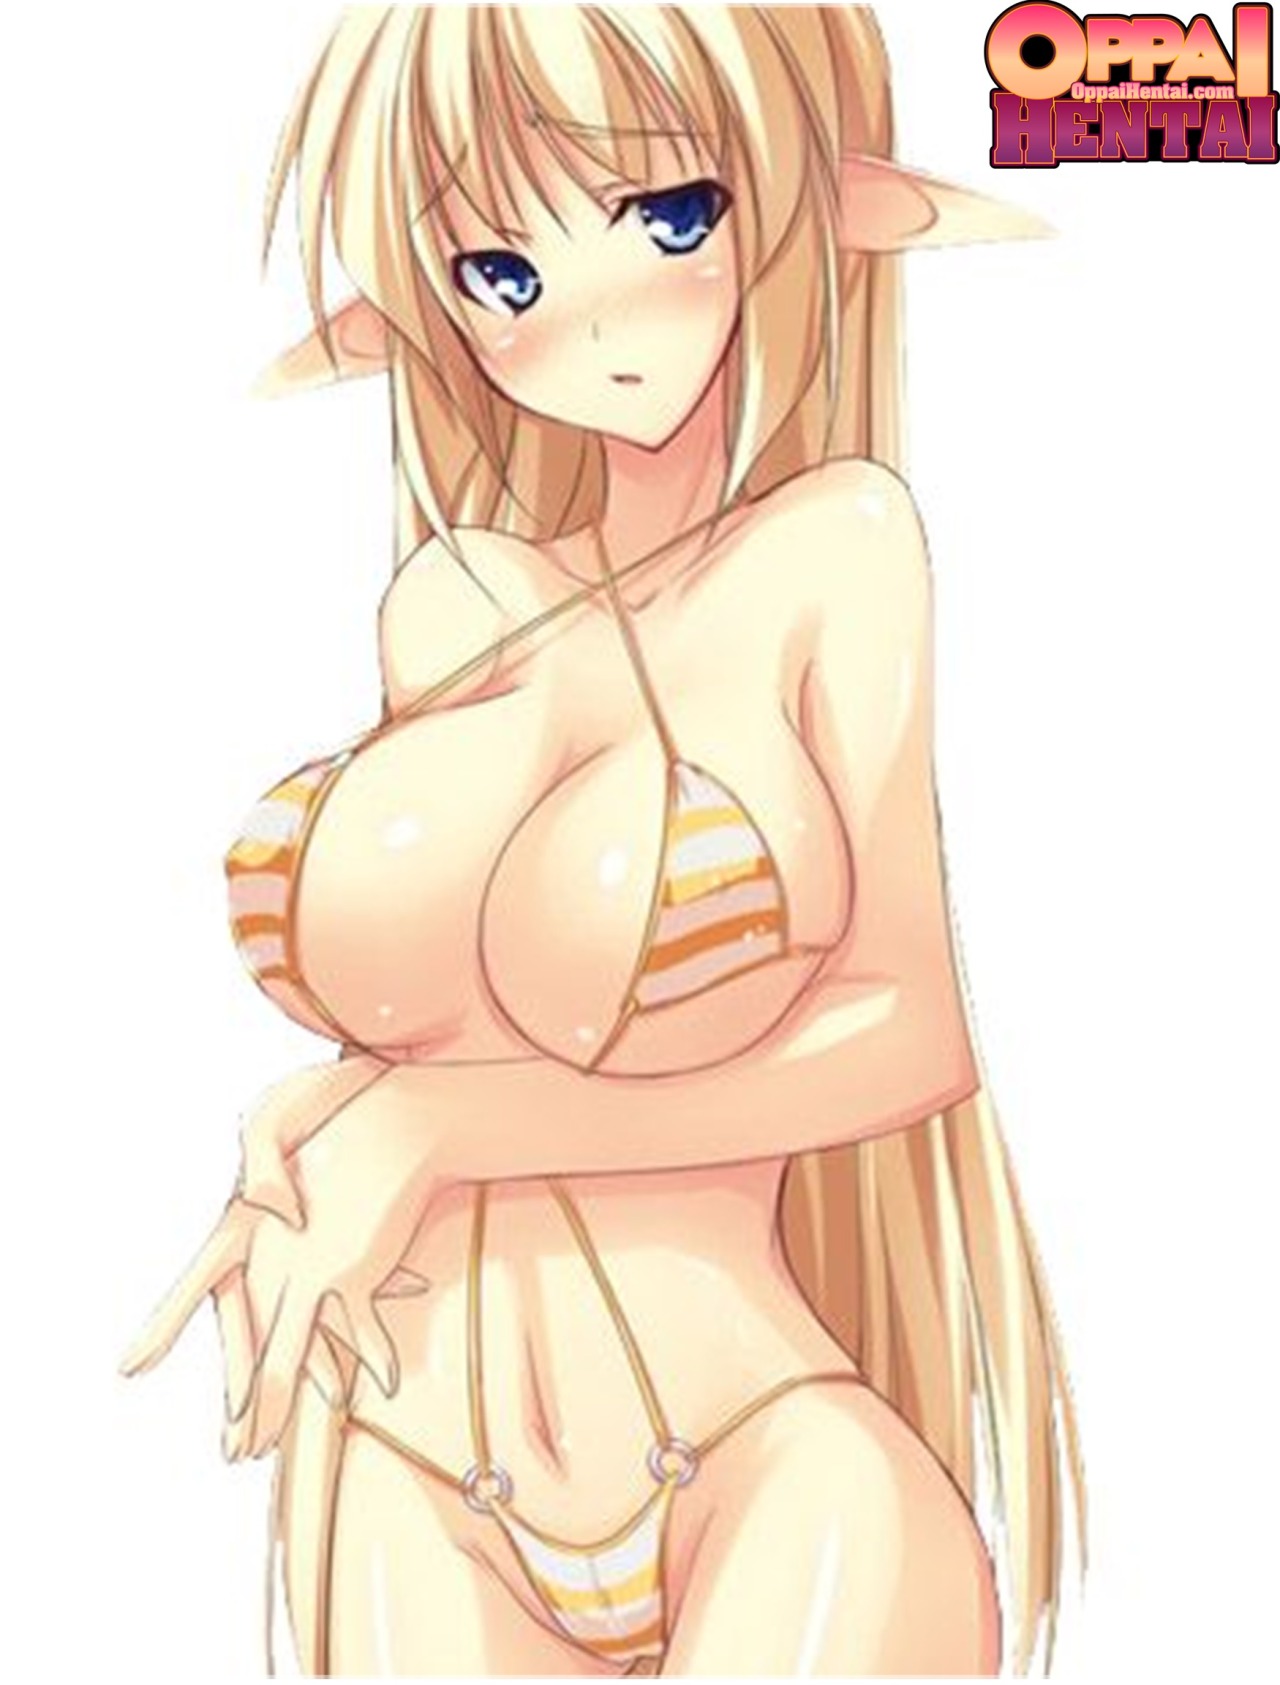 Big Tit Blonde Anime Girl Hentai - Hentai Gallery